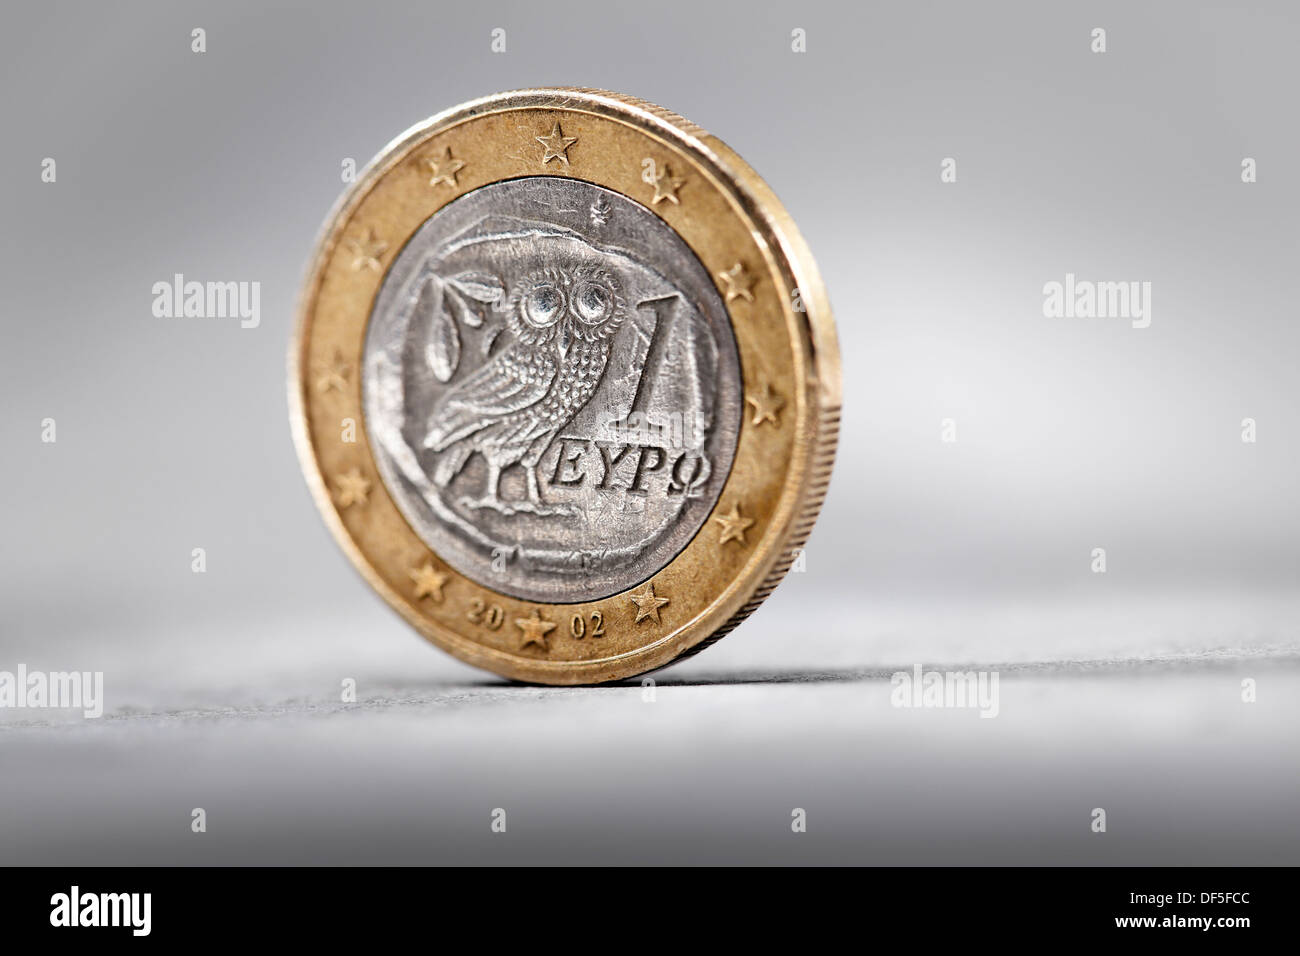 1 Euro Coin, European Union Stock Image - Image of green, euros: 105099467